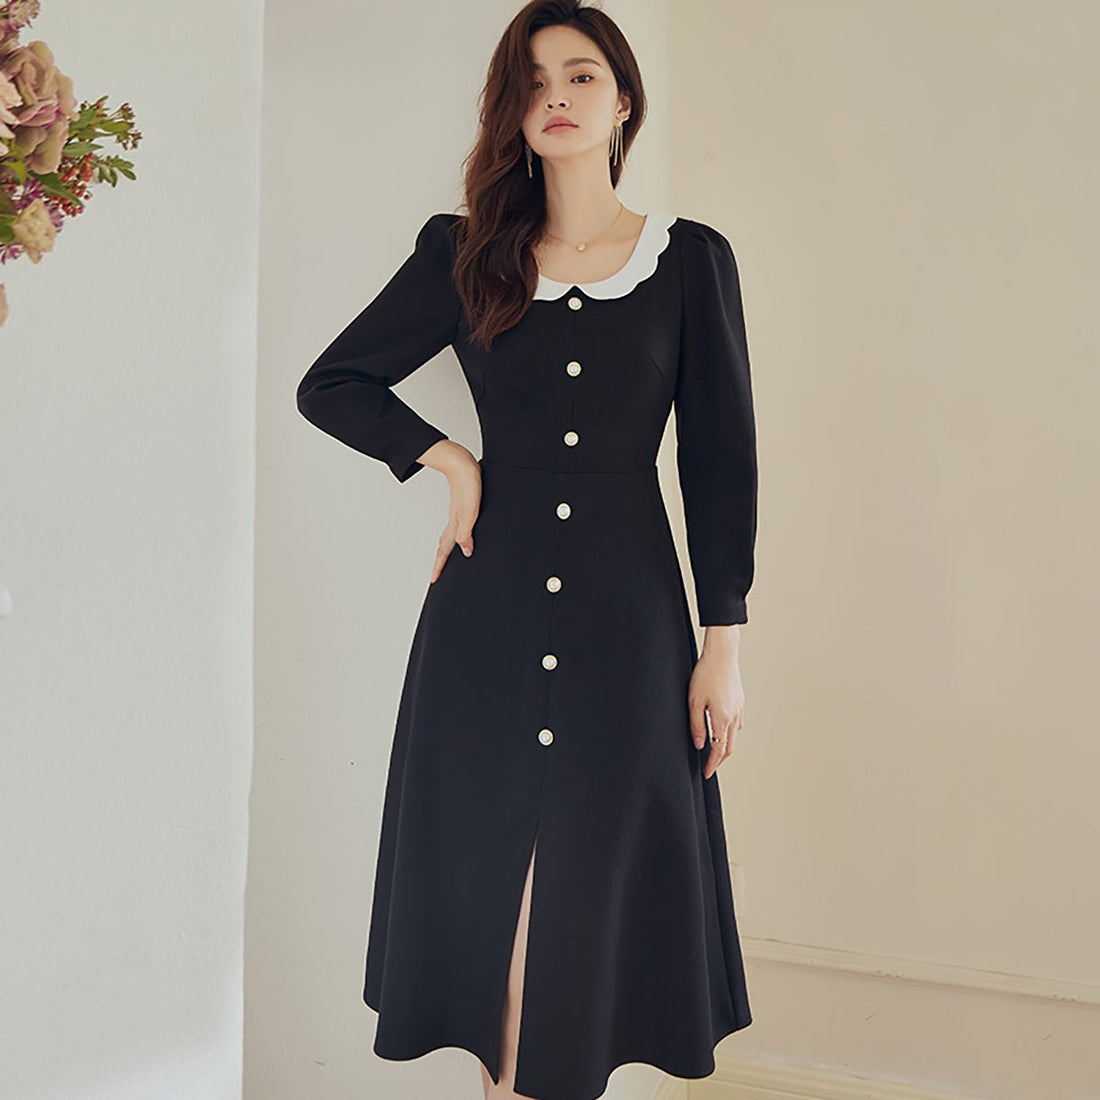 Vintage Pearl Detail Black A-Line Dress - 0cm